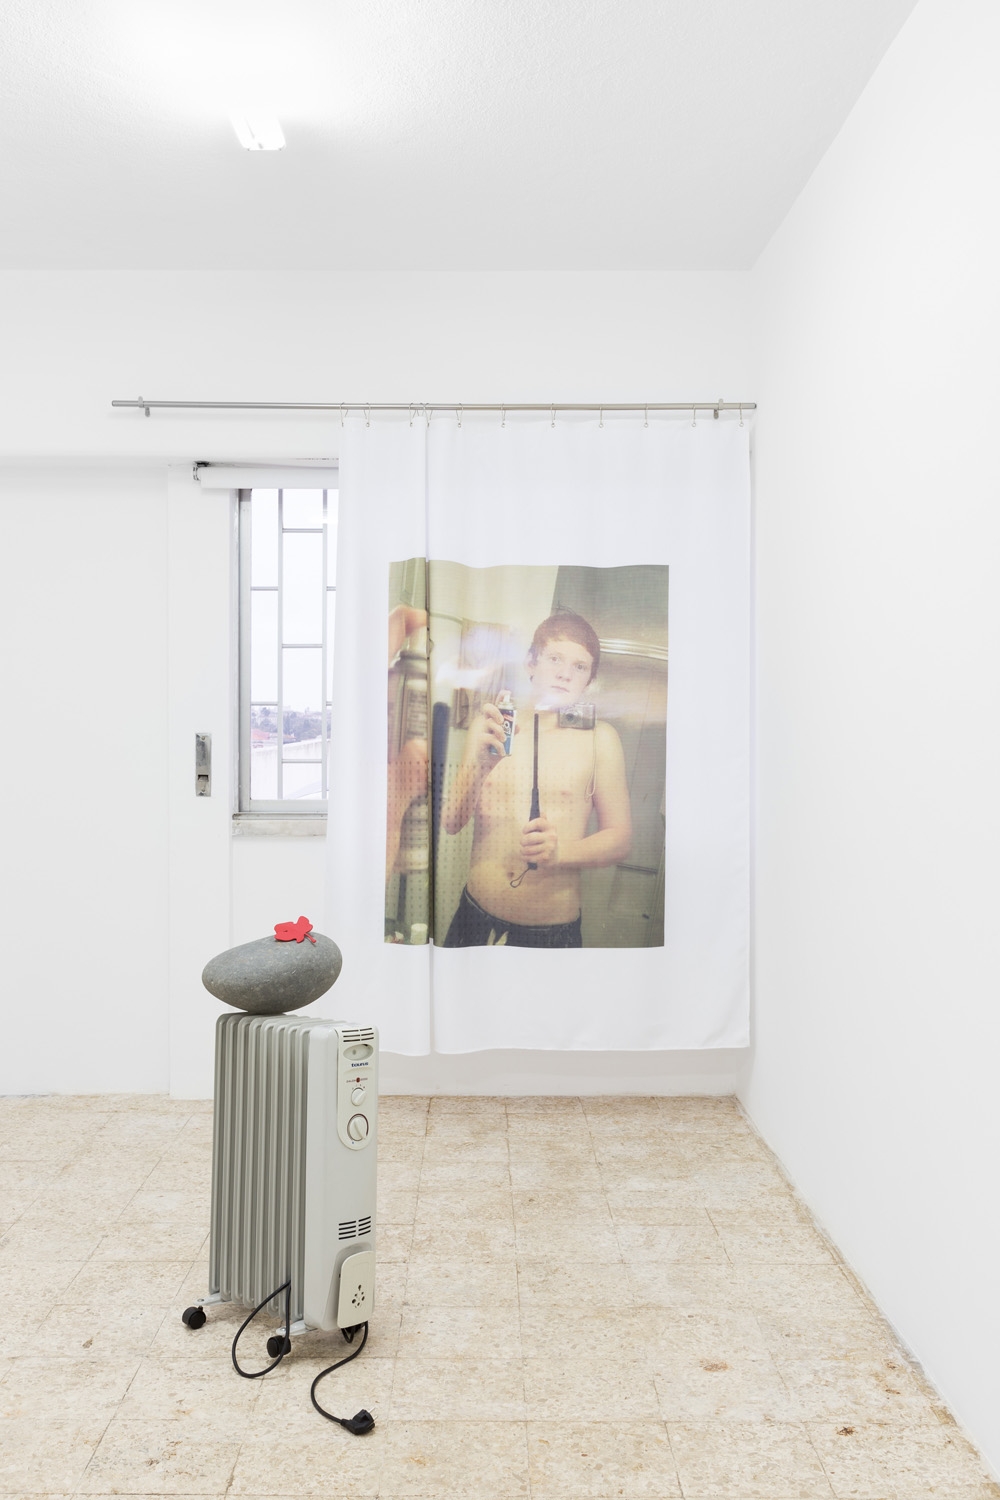 Arson (2016)
Shower Curtain with Inkjet print. 180 x 200 cm.  
Radiator (2016)
Oil-filled radiator Taurus, Dalda 2000. Intimate massager Eve. Stone. 30 x 40 
x 80 cm.   
Photo: Bruno Lopes.
